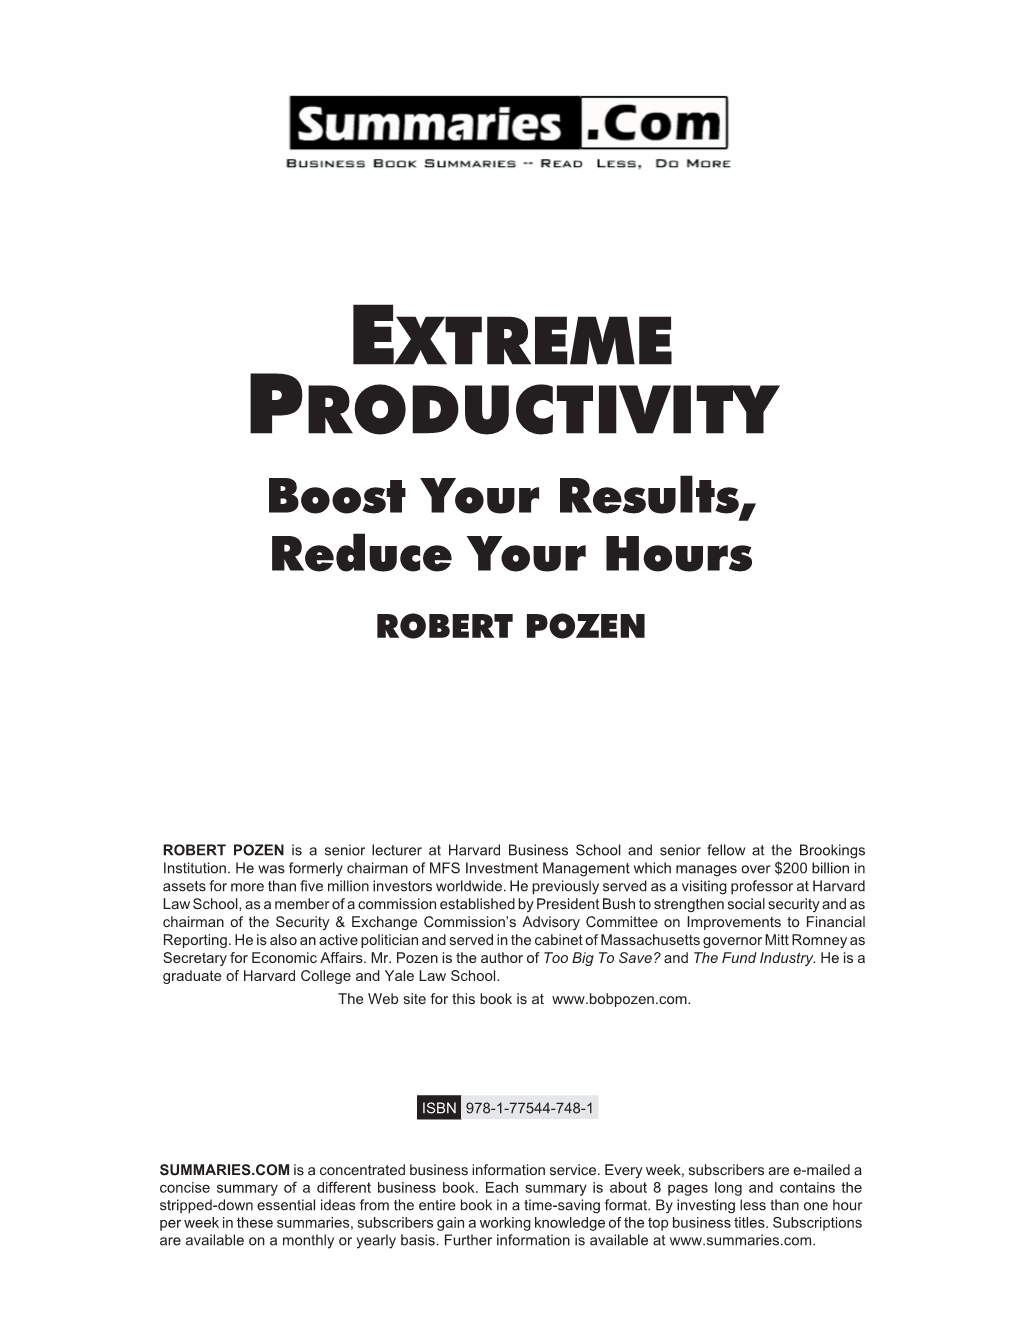 "Extreme Productivity" by Robert Pozen